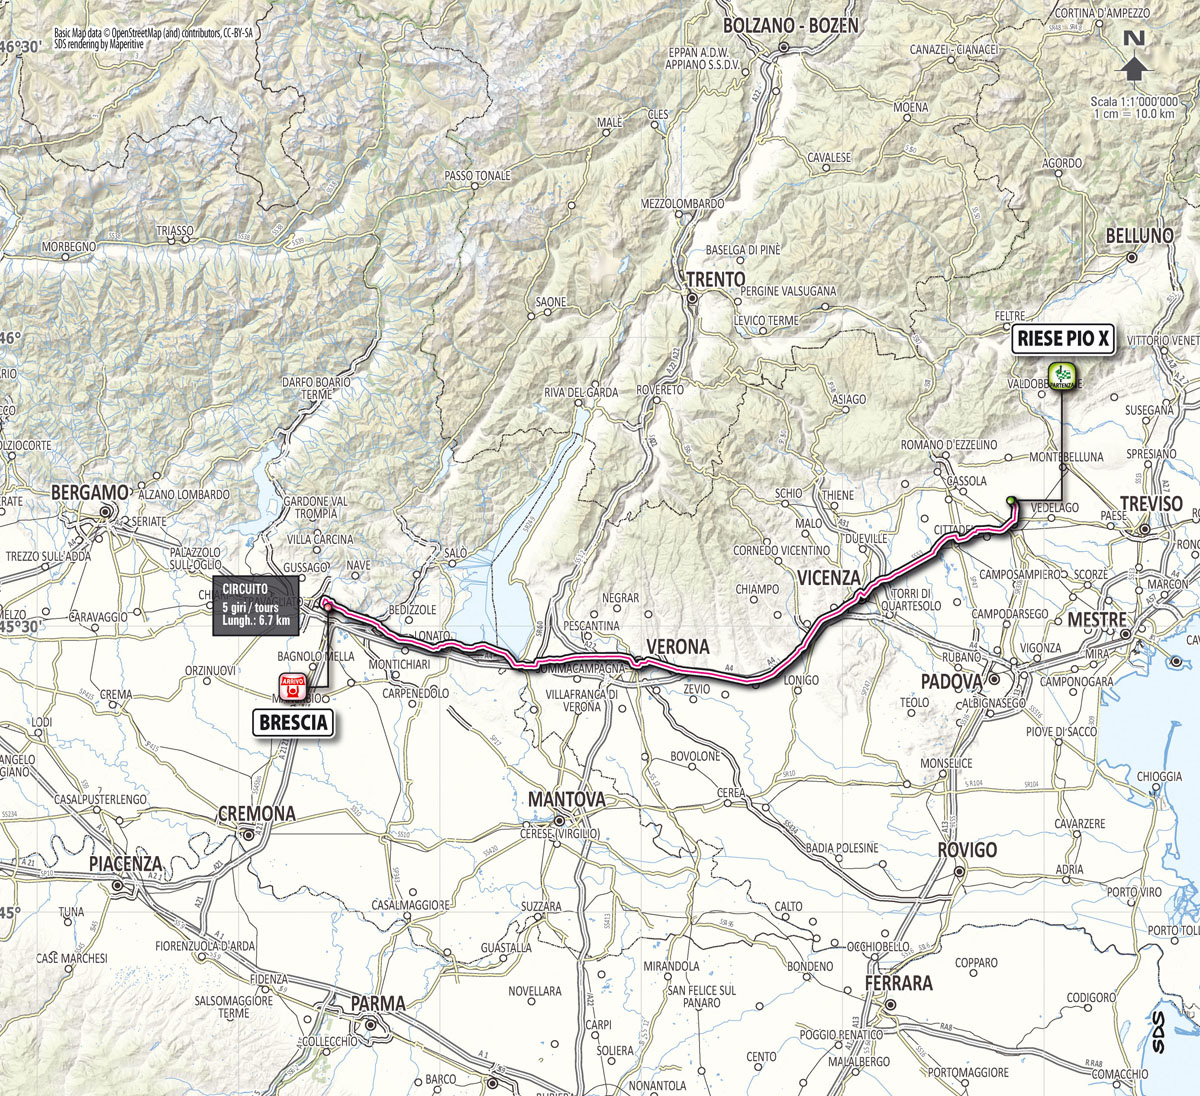 Giro d'Italia 2013 stage 21 map